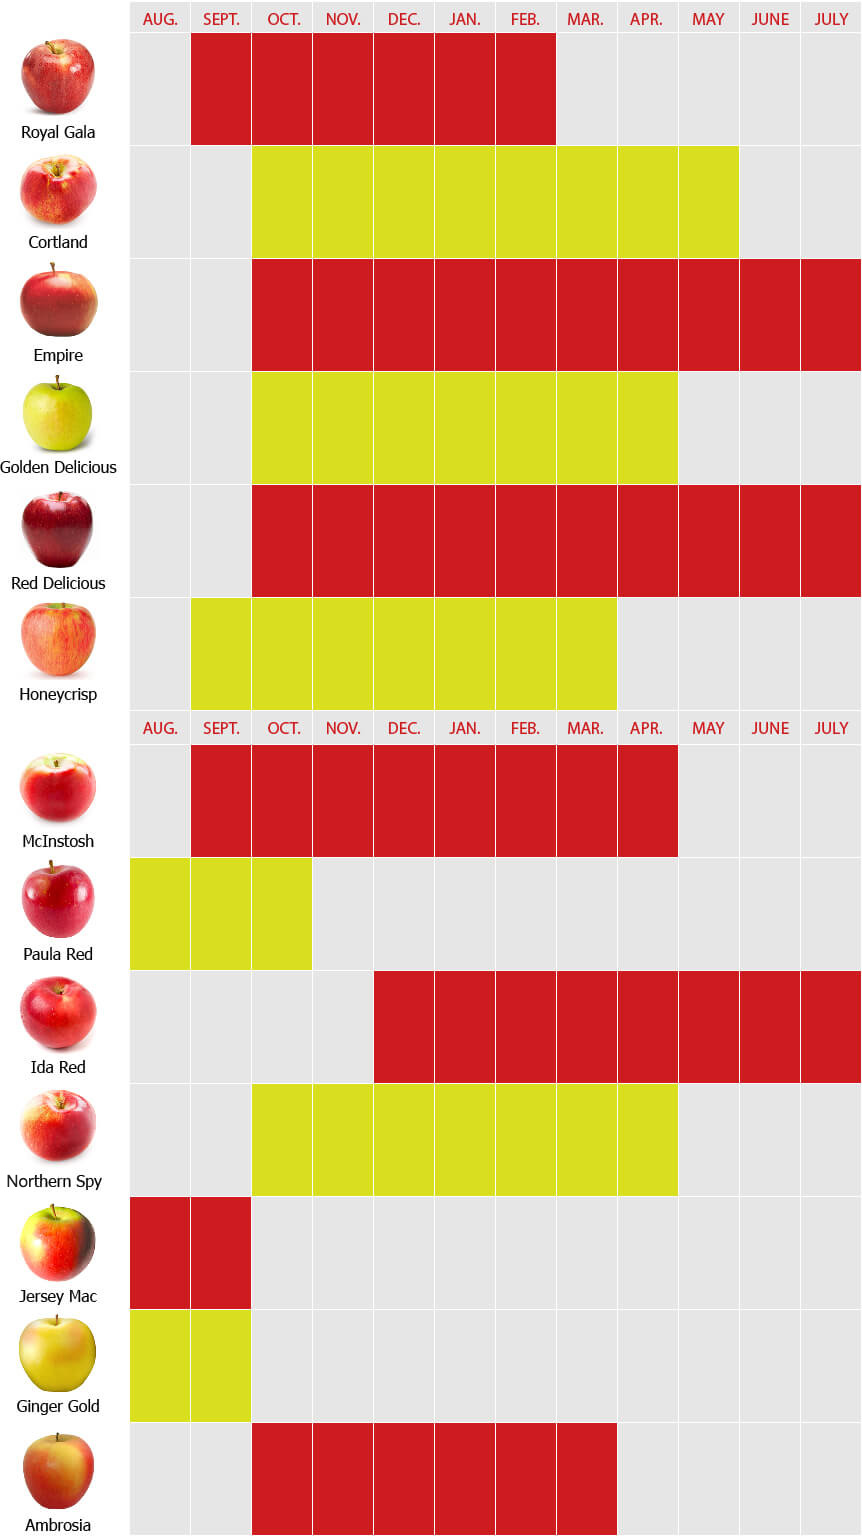 Apple chart